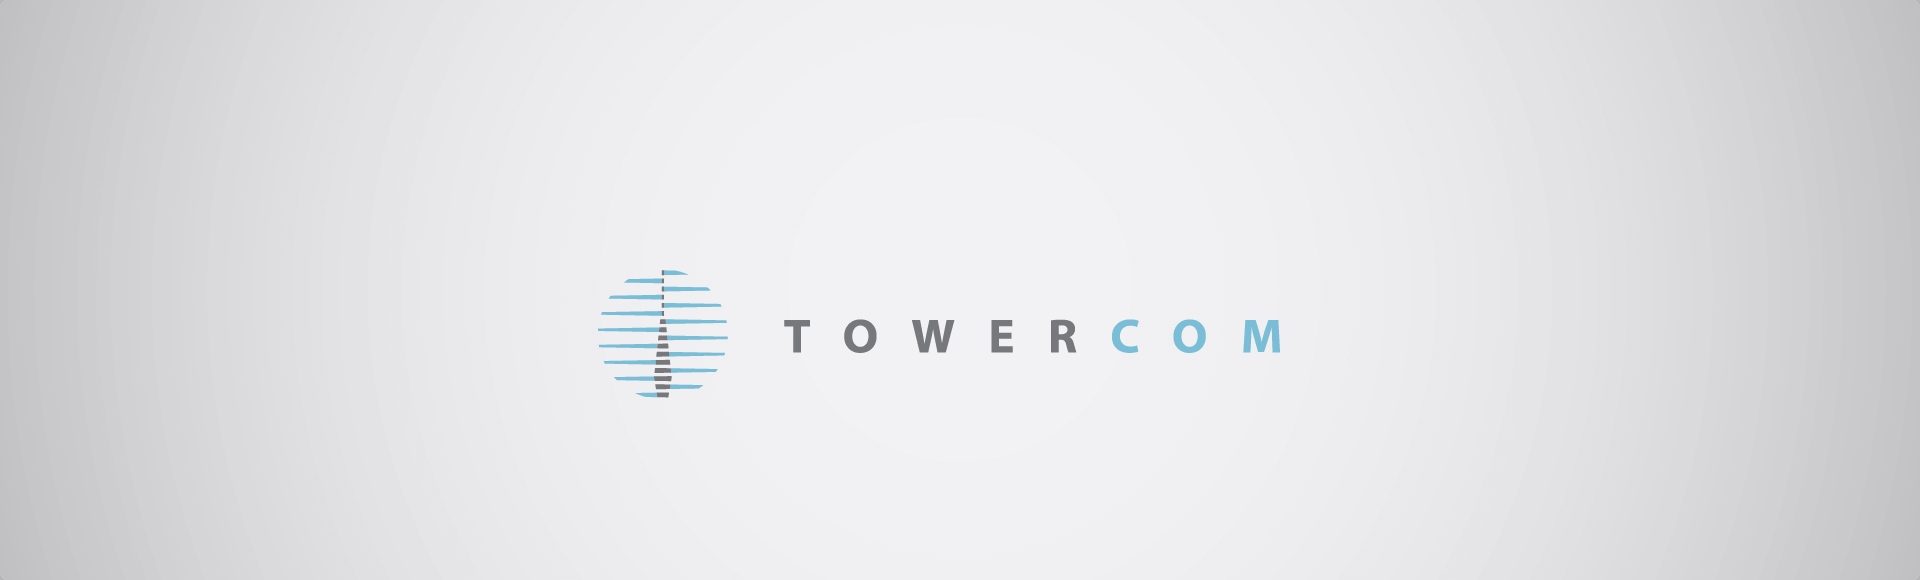 towercom-case-study